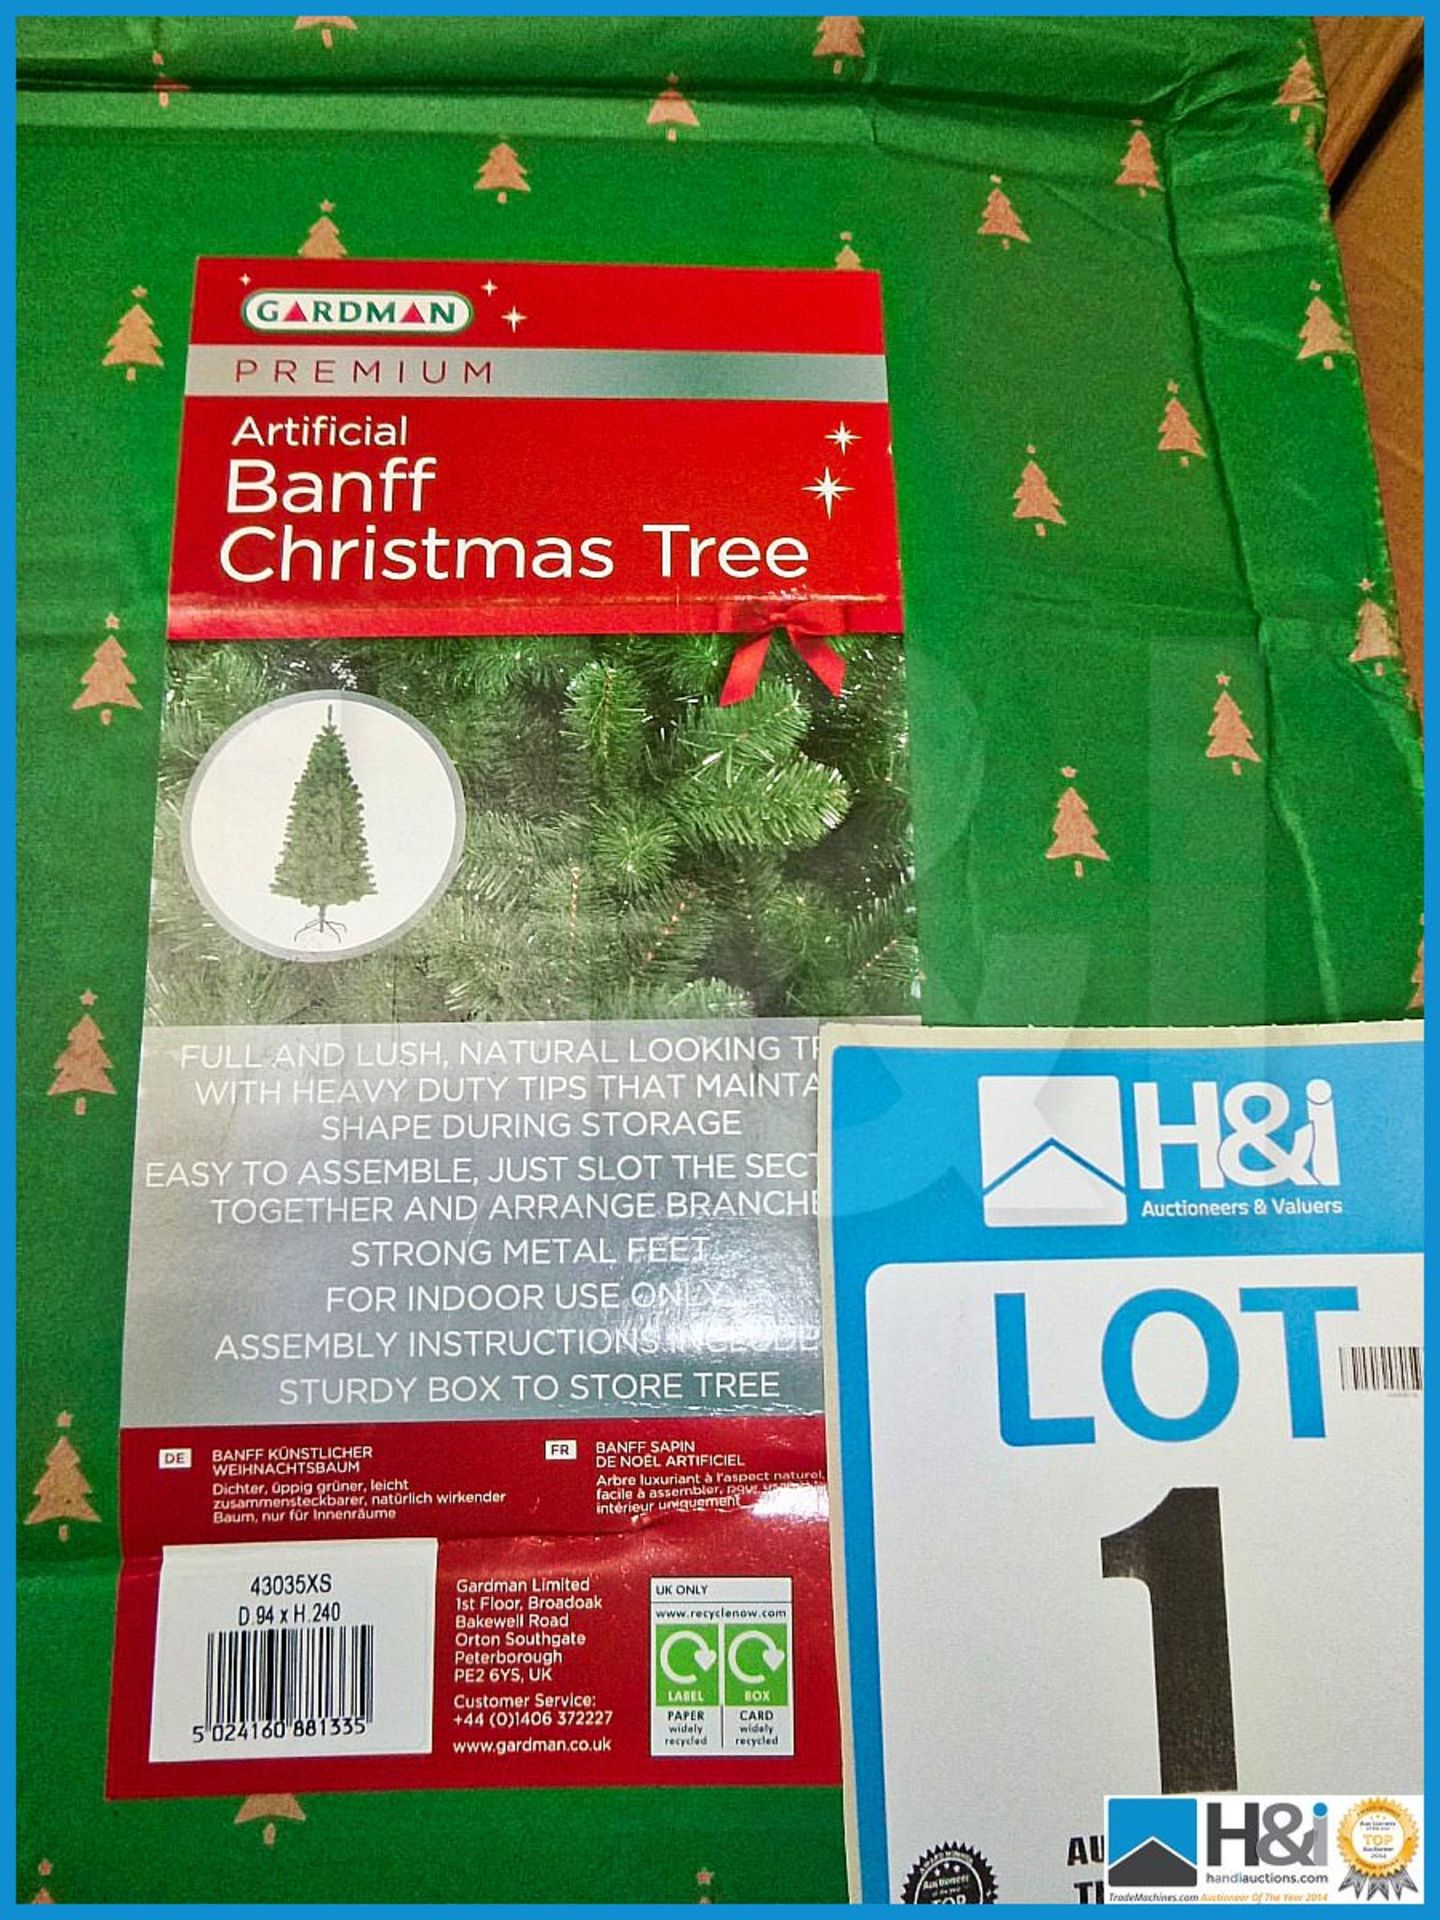 GARDMAN ARTIFICIAL 8' BANFF CHRISTMAS TREE, 43035XS, RRP £129.99, FULL AND LUSH NATURAL LOOKING TREE